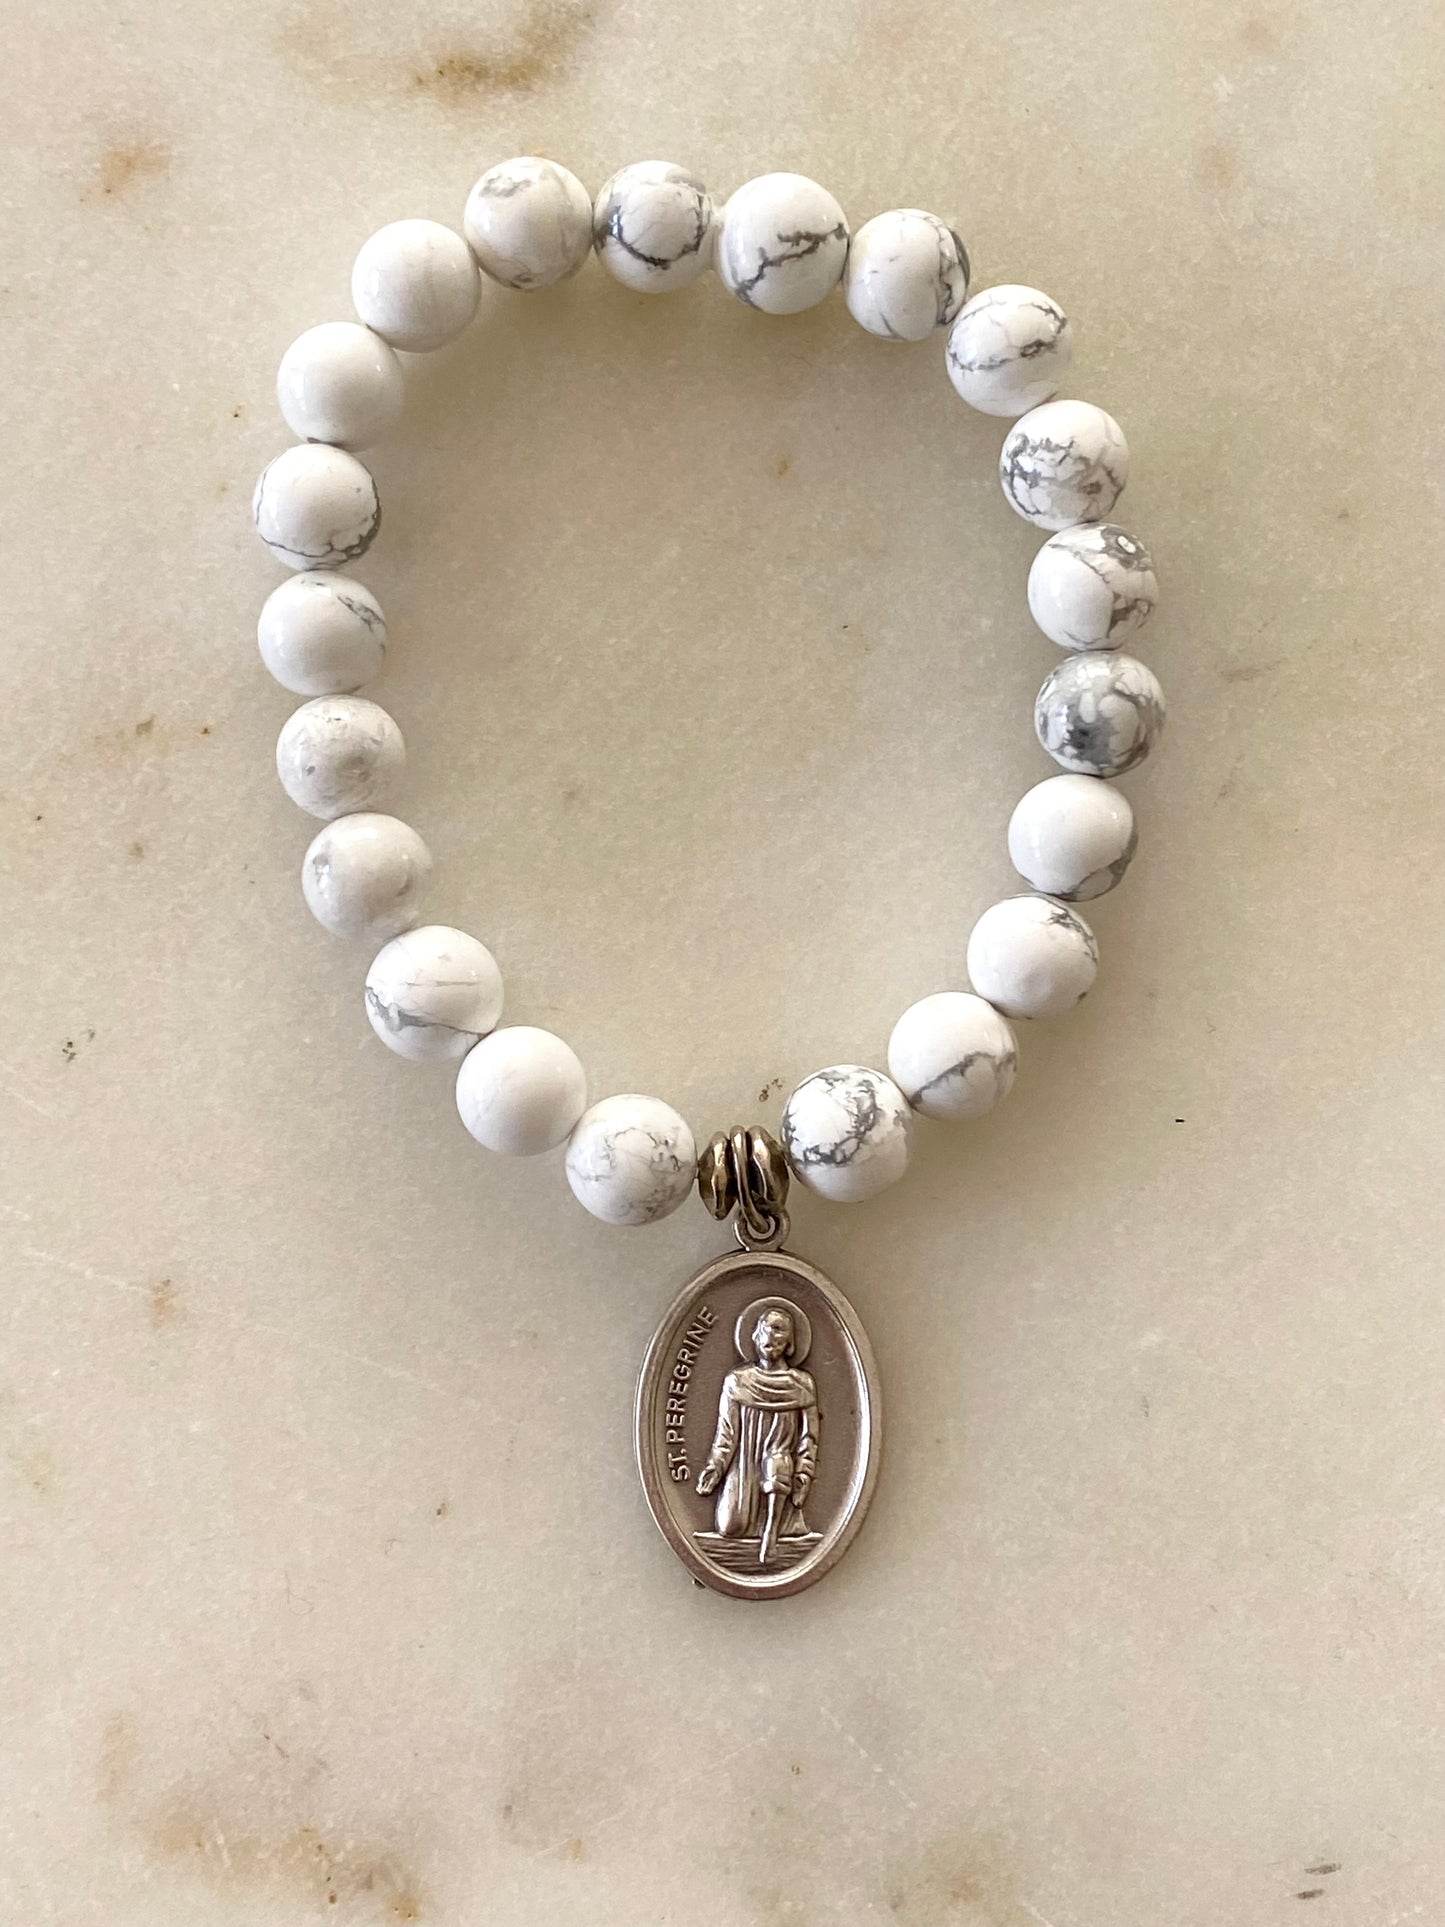 St. Peregrine Stretch Bracelet - White Beads